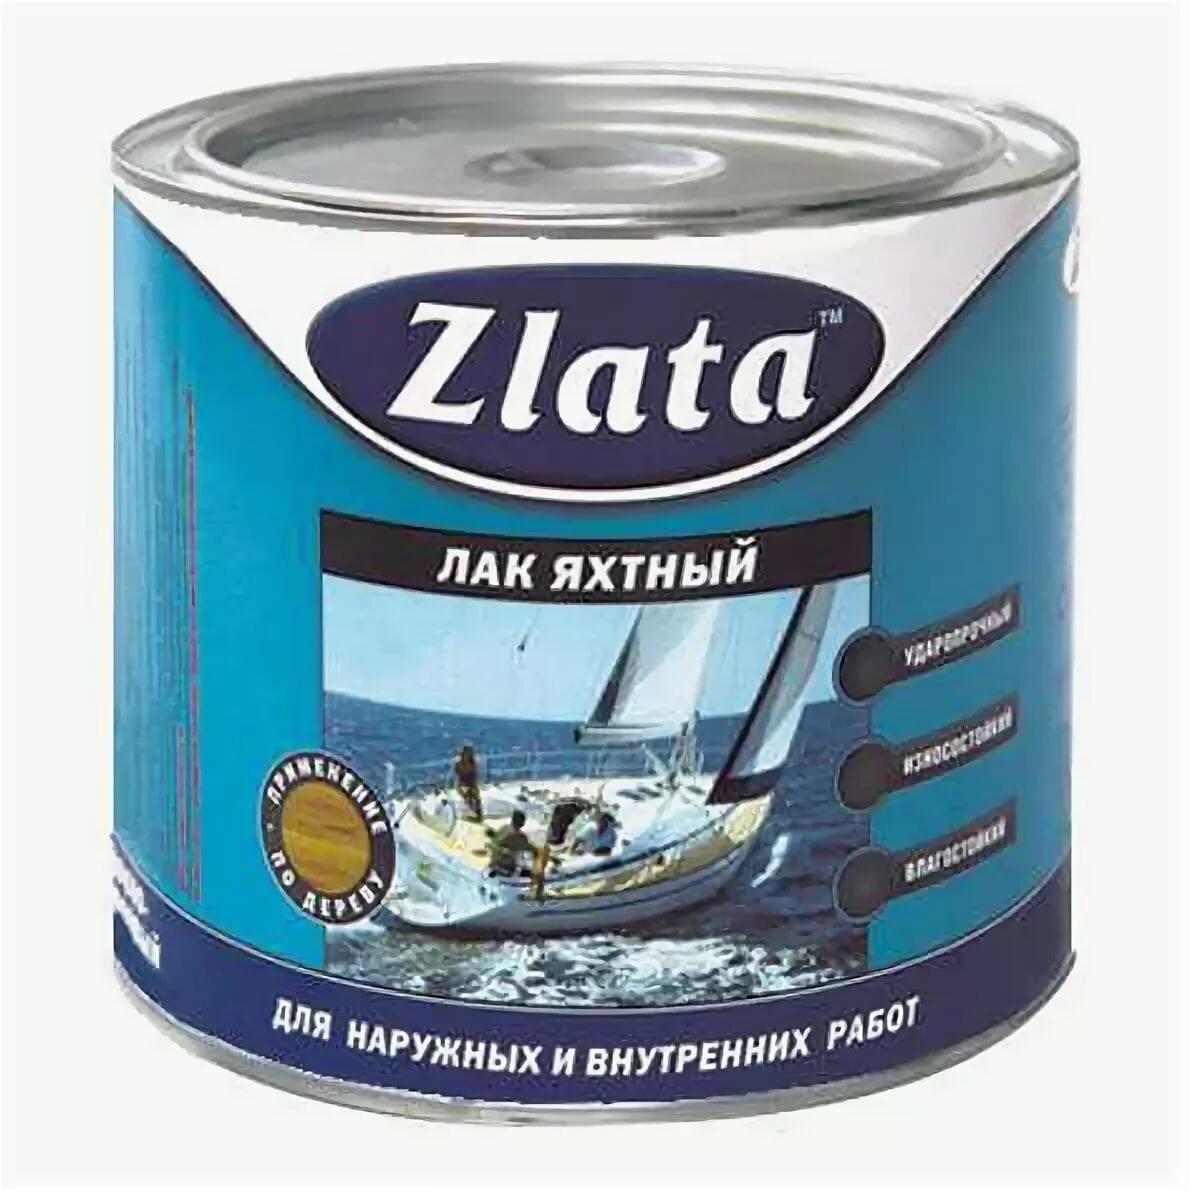 Zlata Лак яхтный Zlata глянцевый 0,9 кг